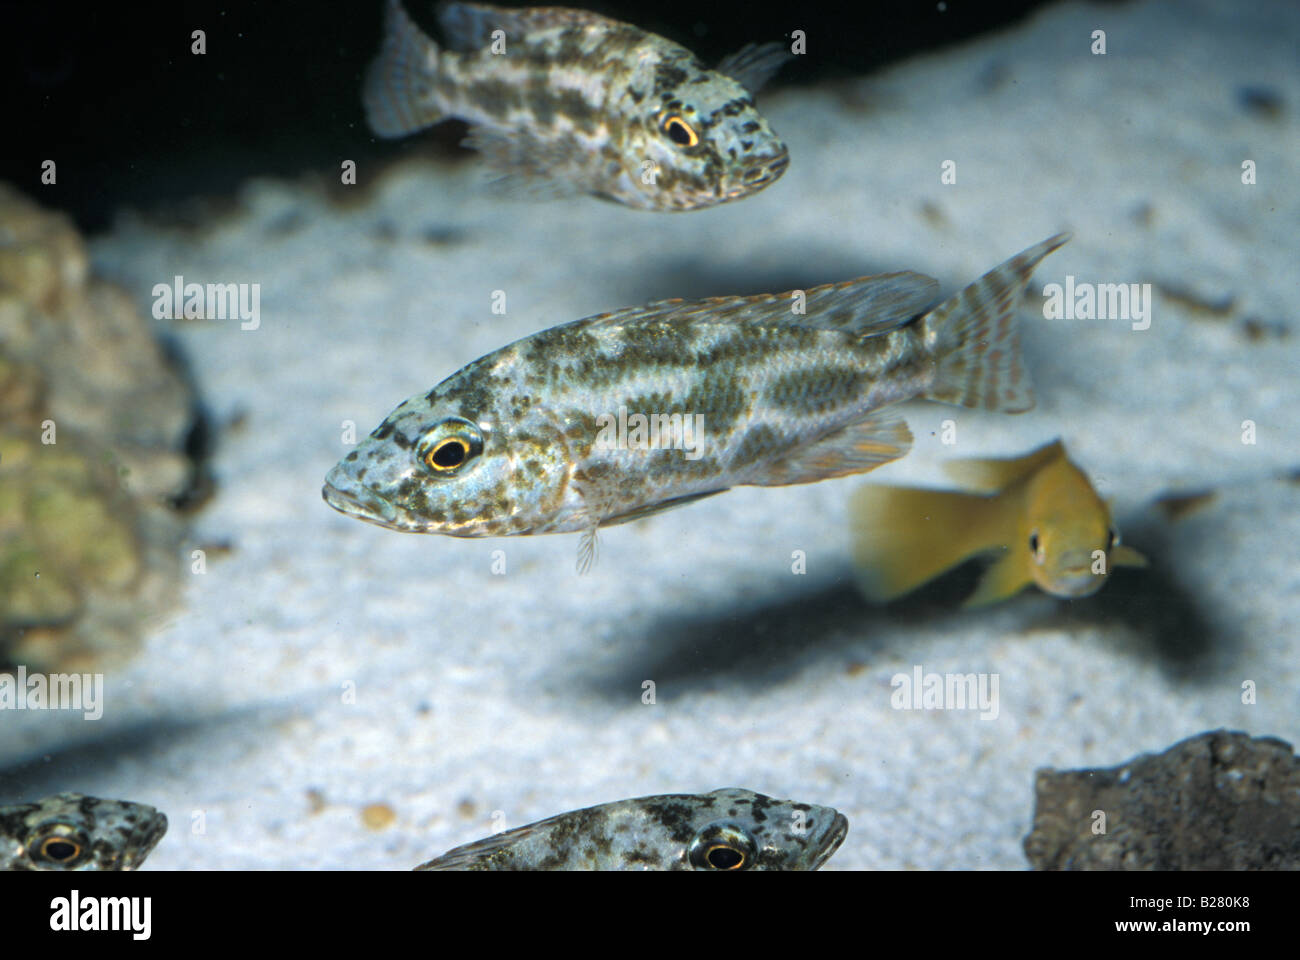 Nimbochromis polystigma, Malawi Lake cichlid, Africa Stock Photo